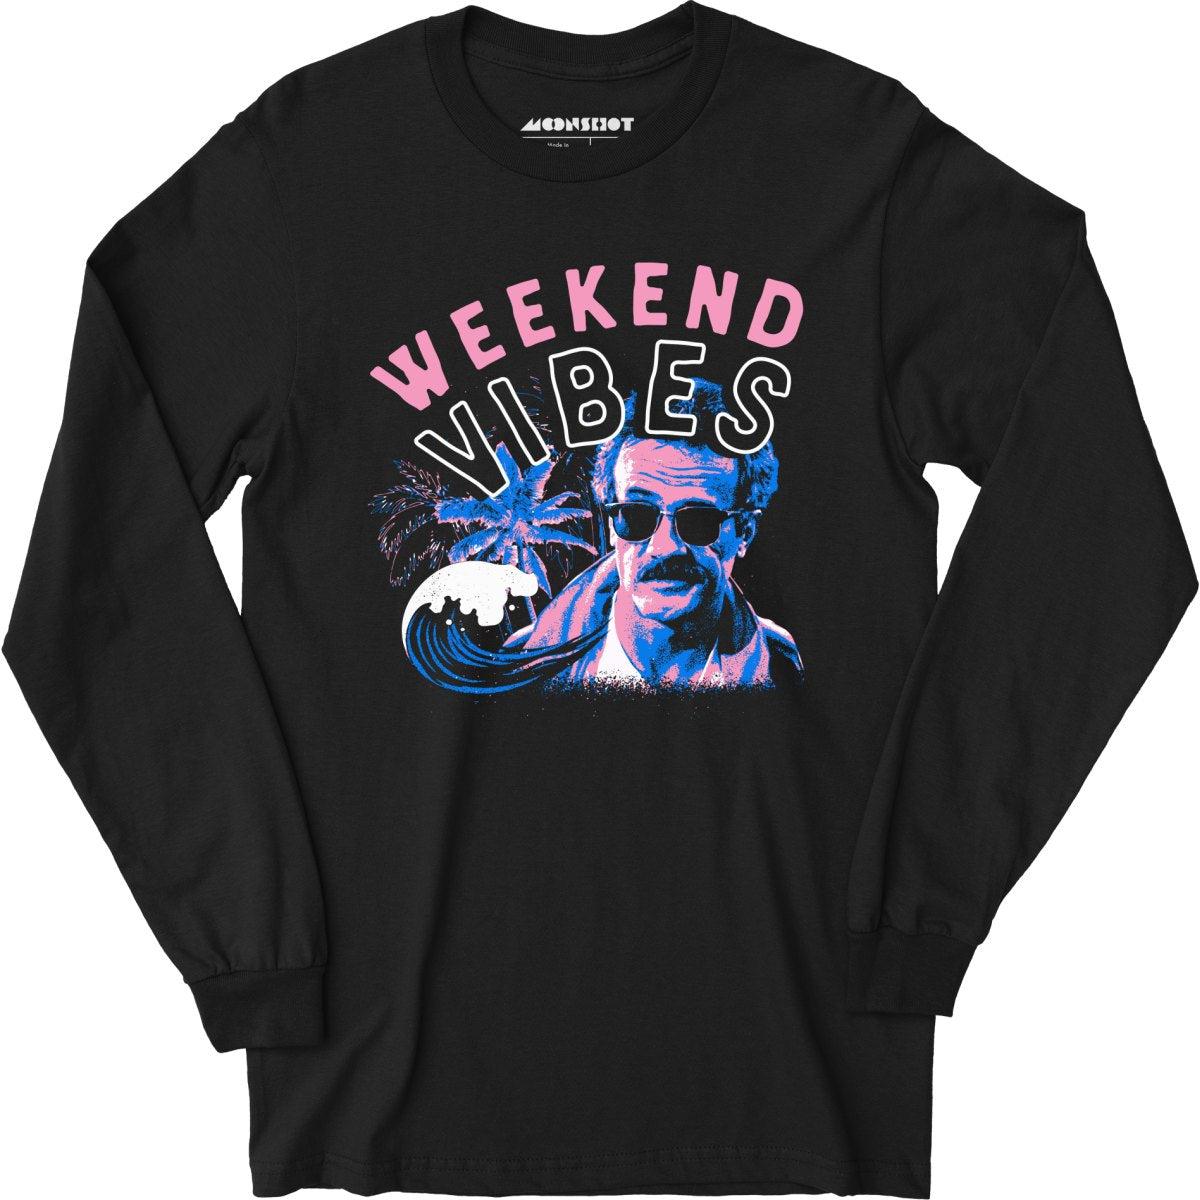 Weekend Vibes - Long Sleeve T-Shirt